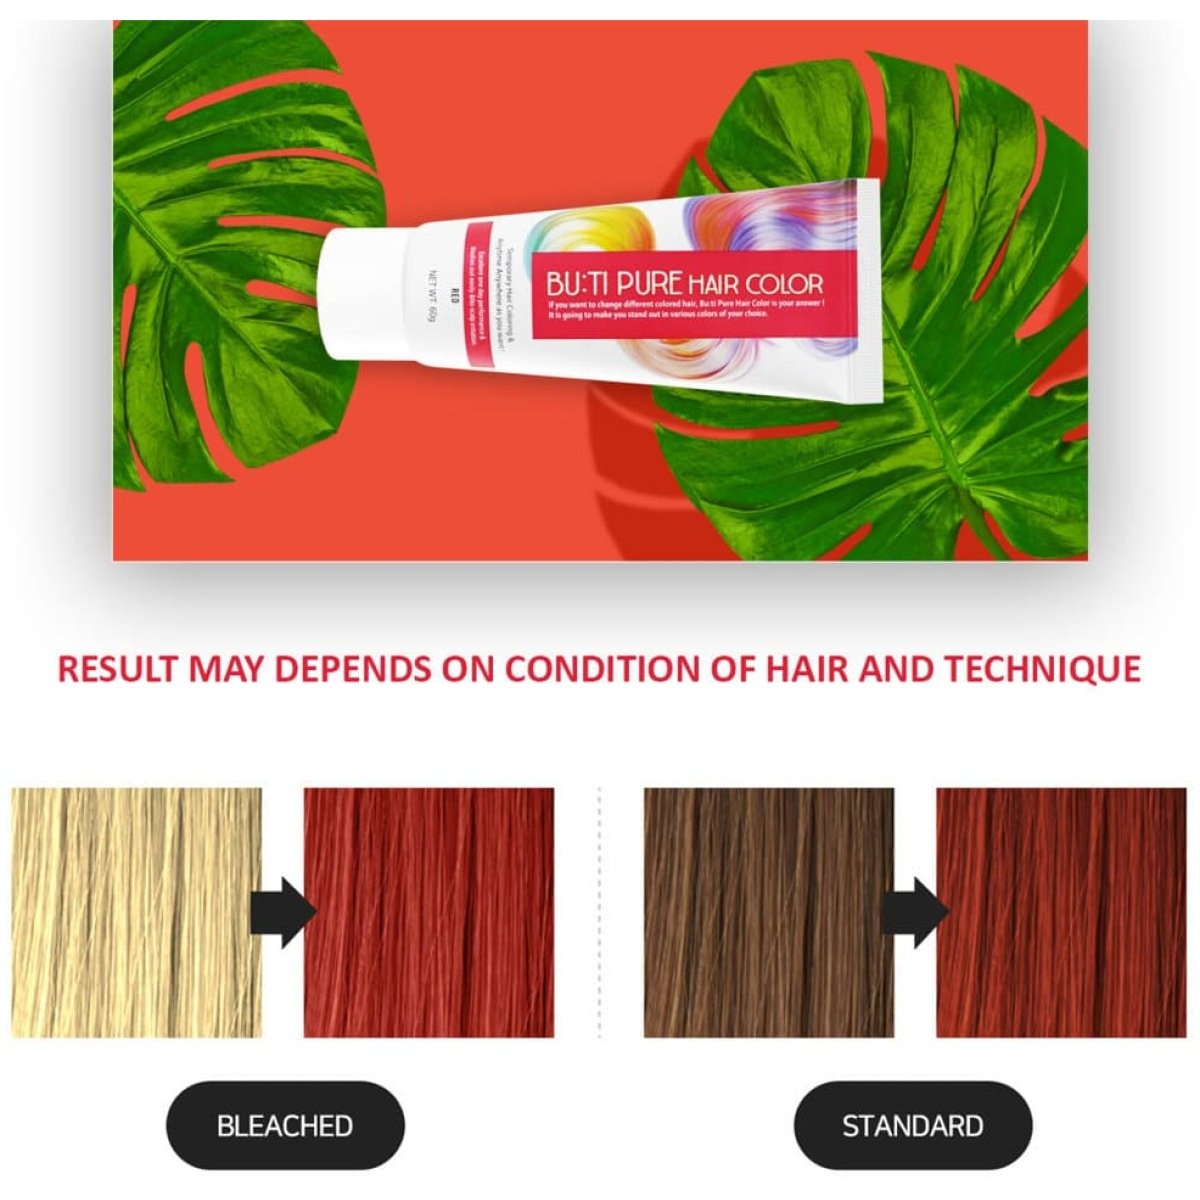 Butipure Vivid Red Semi Permanent Conditioning Temporary Waterproof Hair Color 60ml